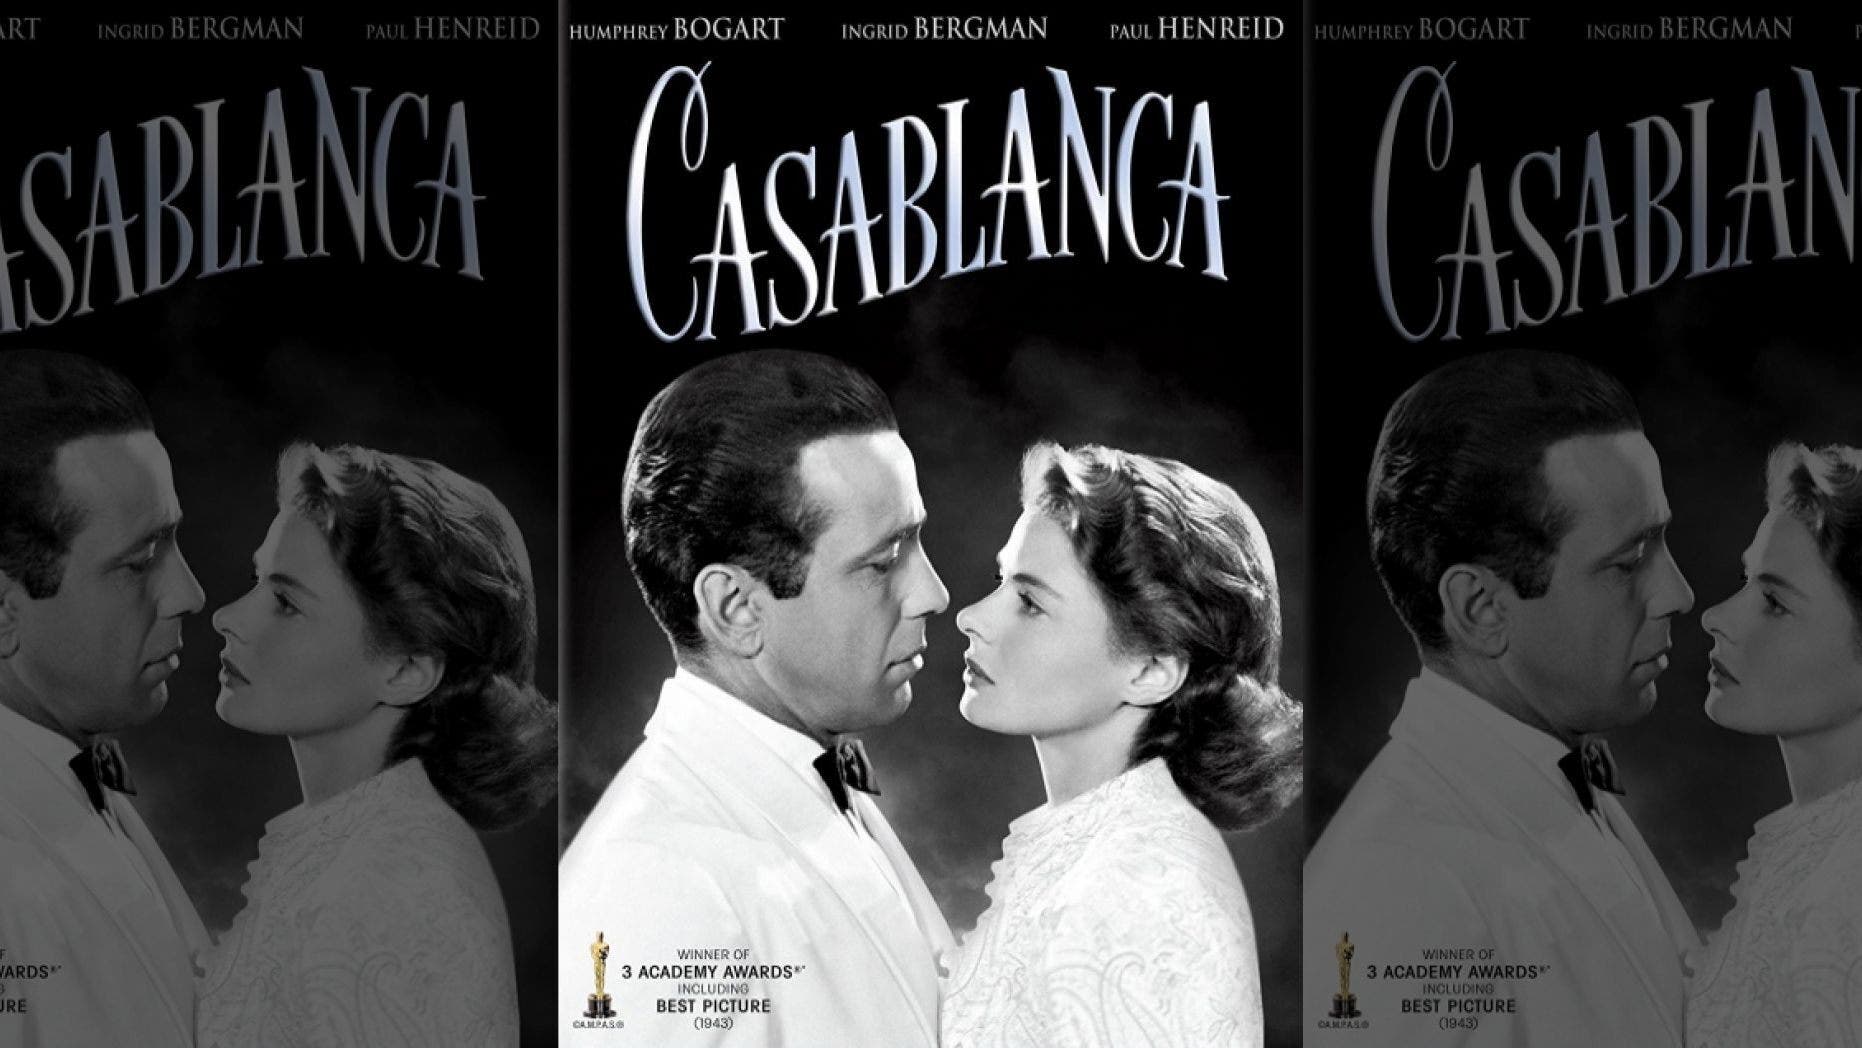 Politics has been my life but 'Casablanca’ at 80 still has much to teach us